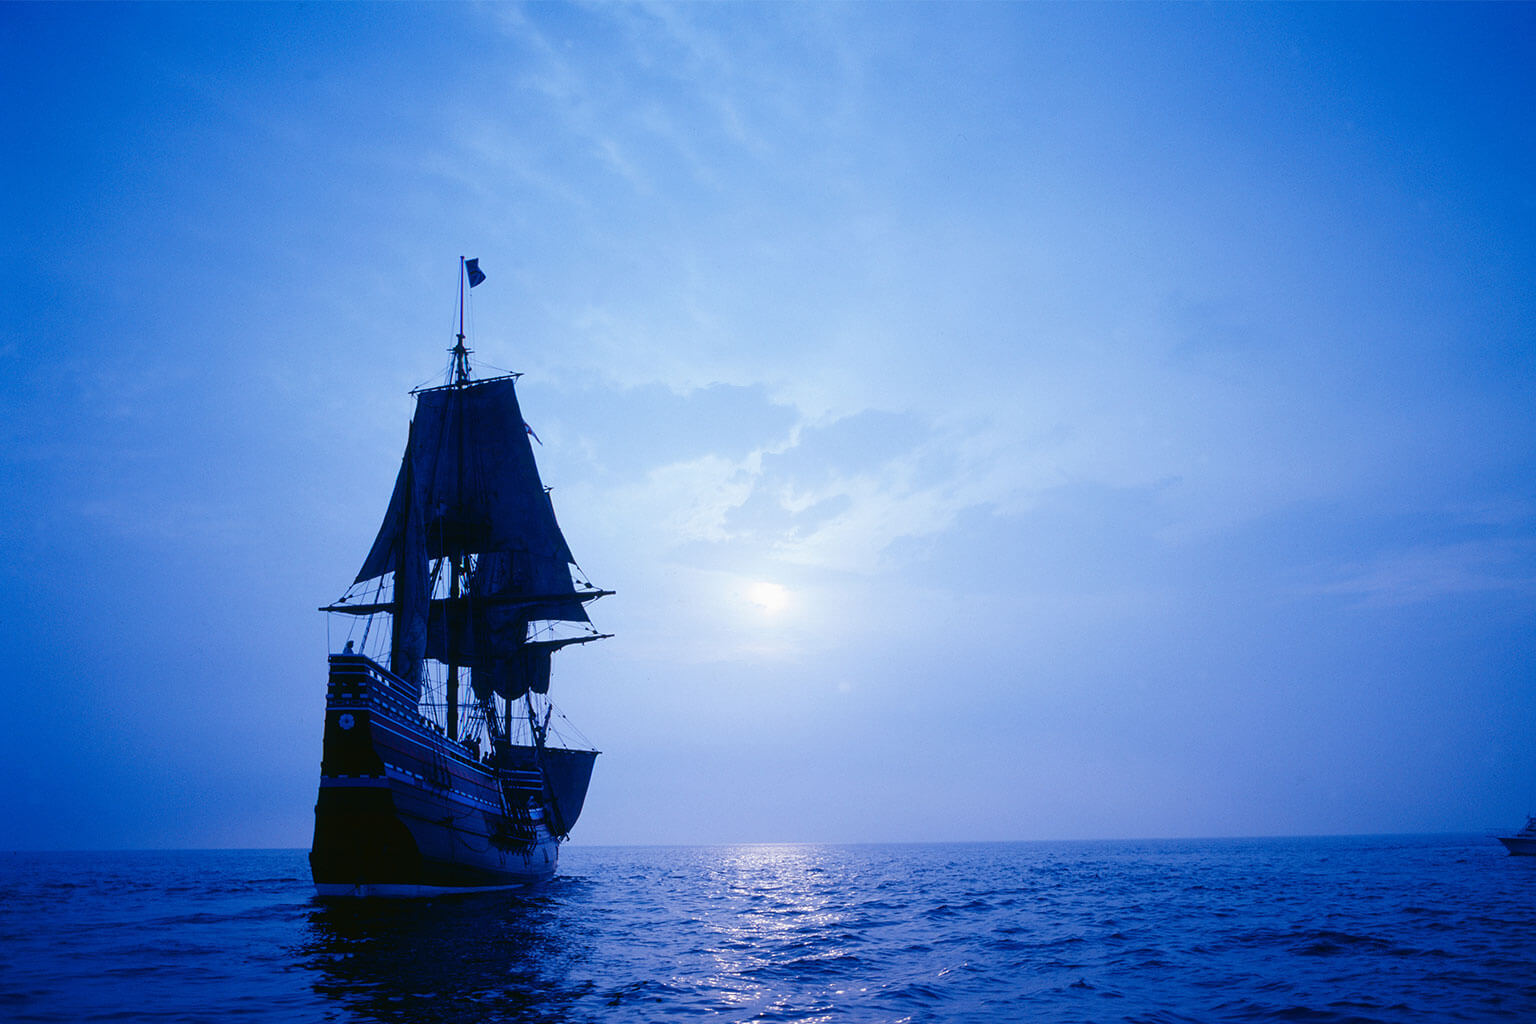 Stock photo: A replica of the Mayflower floats on the ocean under moonlight. © spiritofamerica